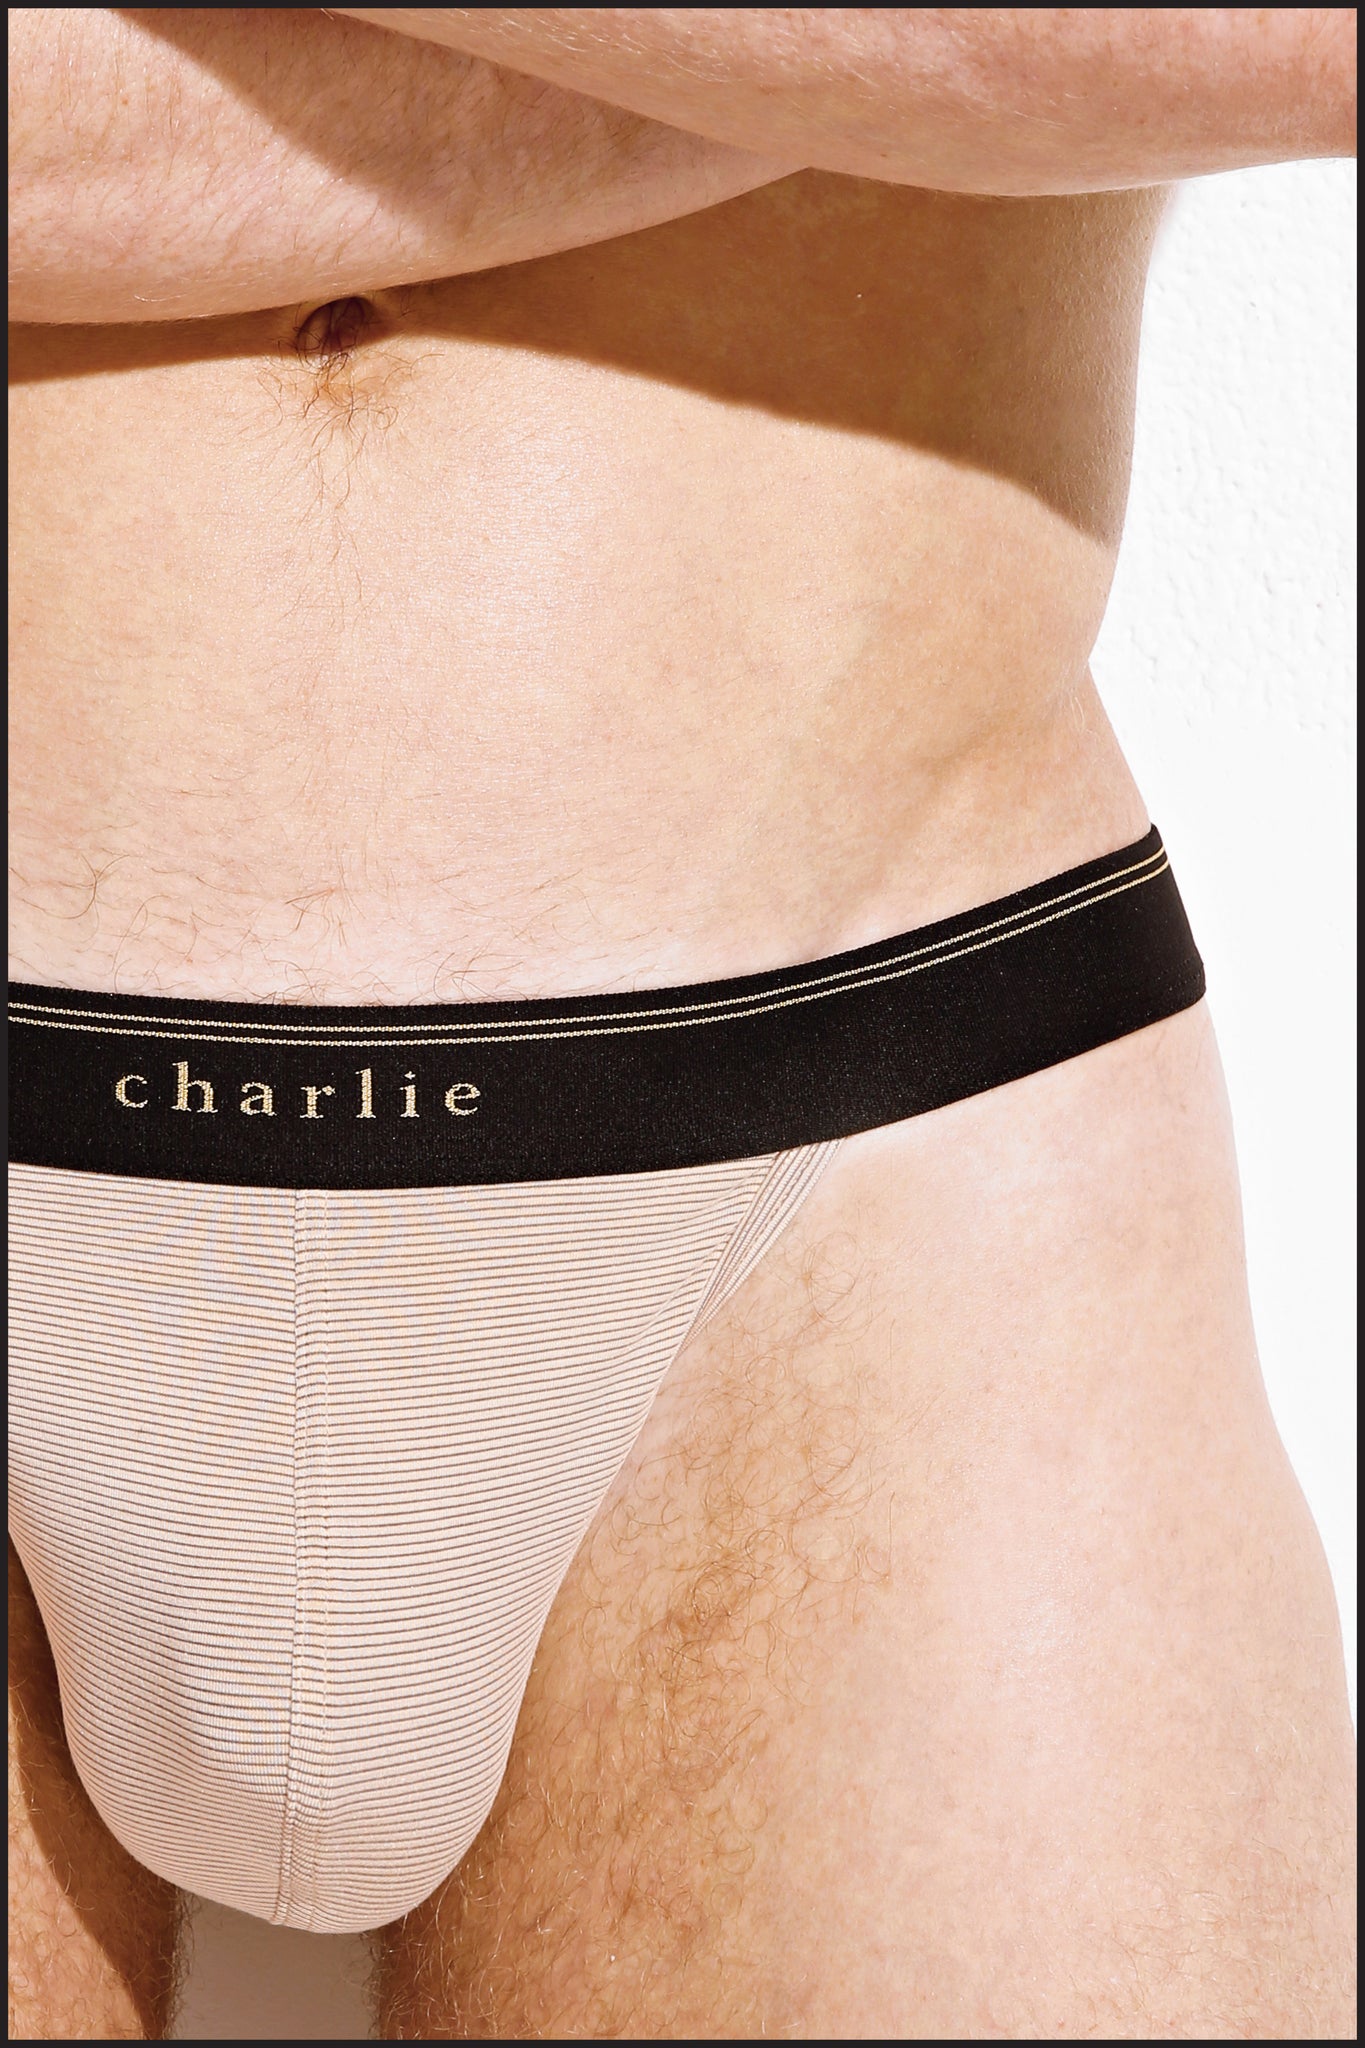 Charlie by Matthew Zink Wood Underwear Classic Thong